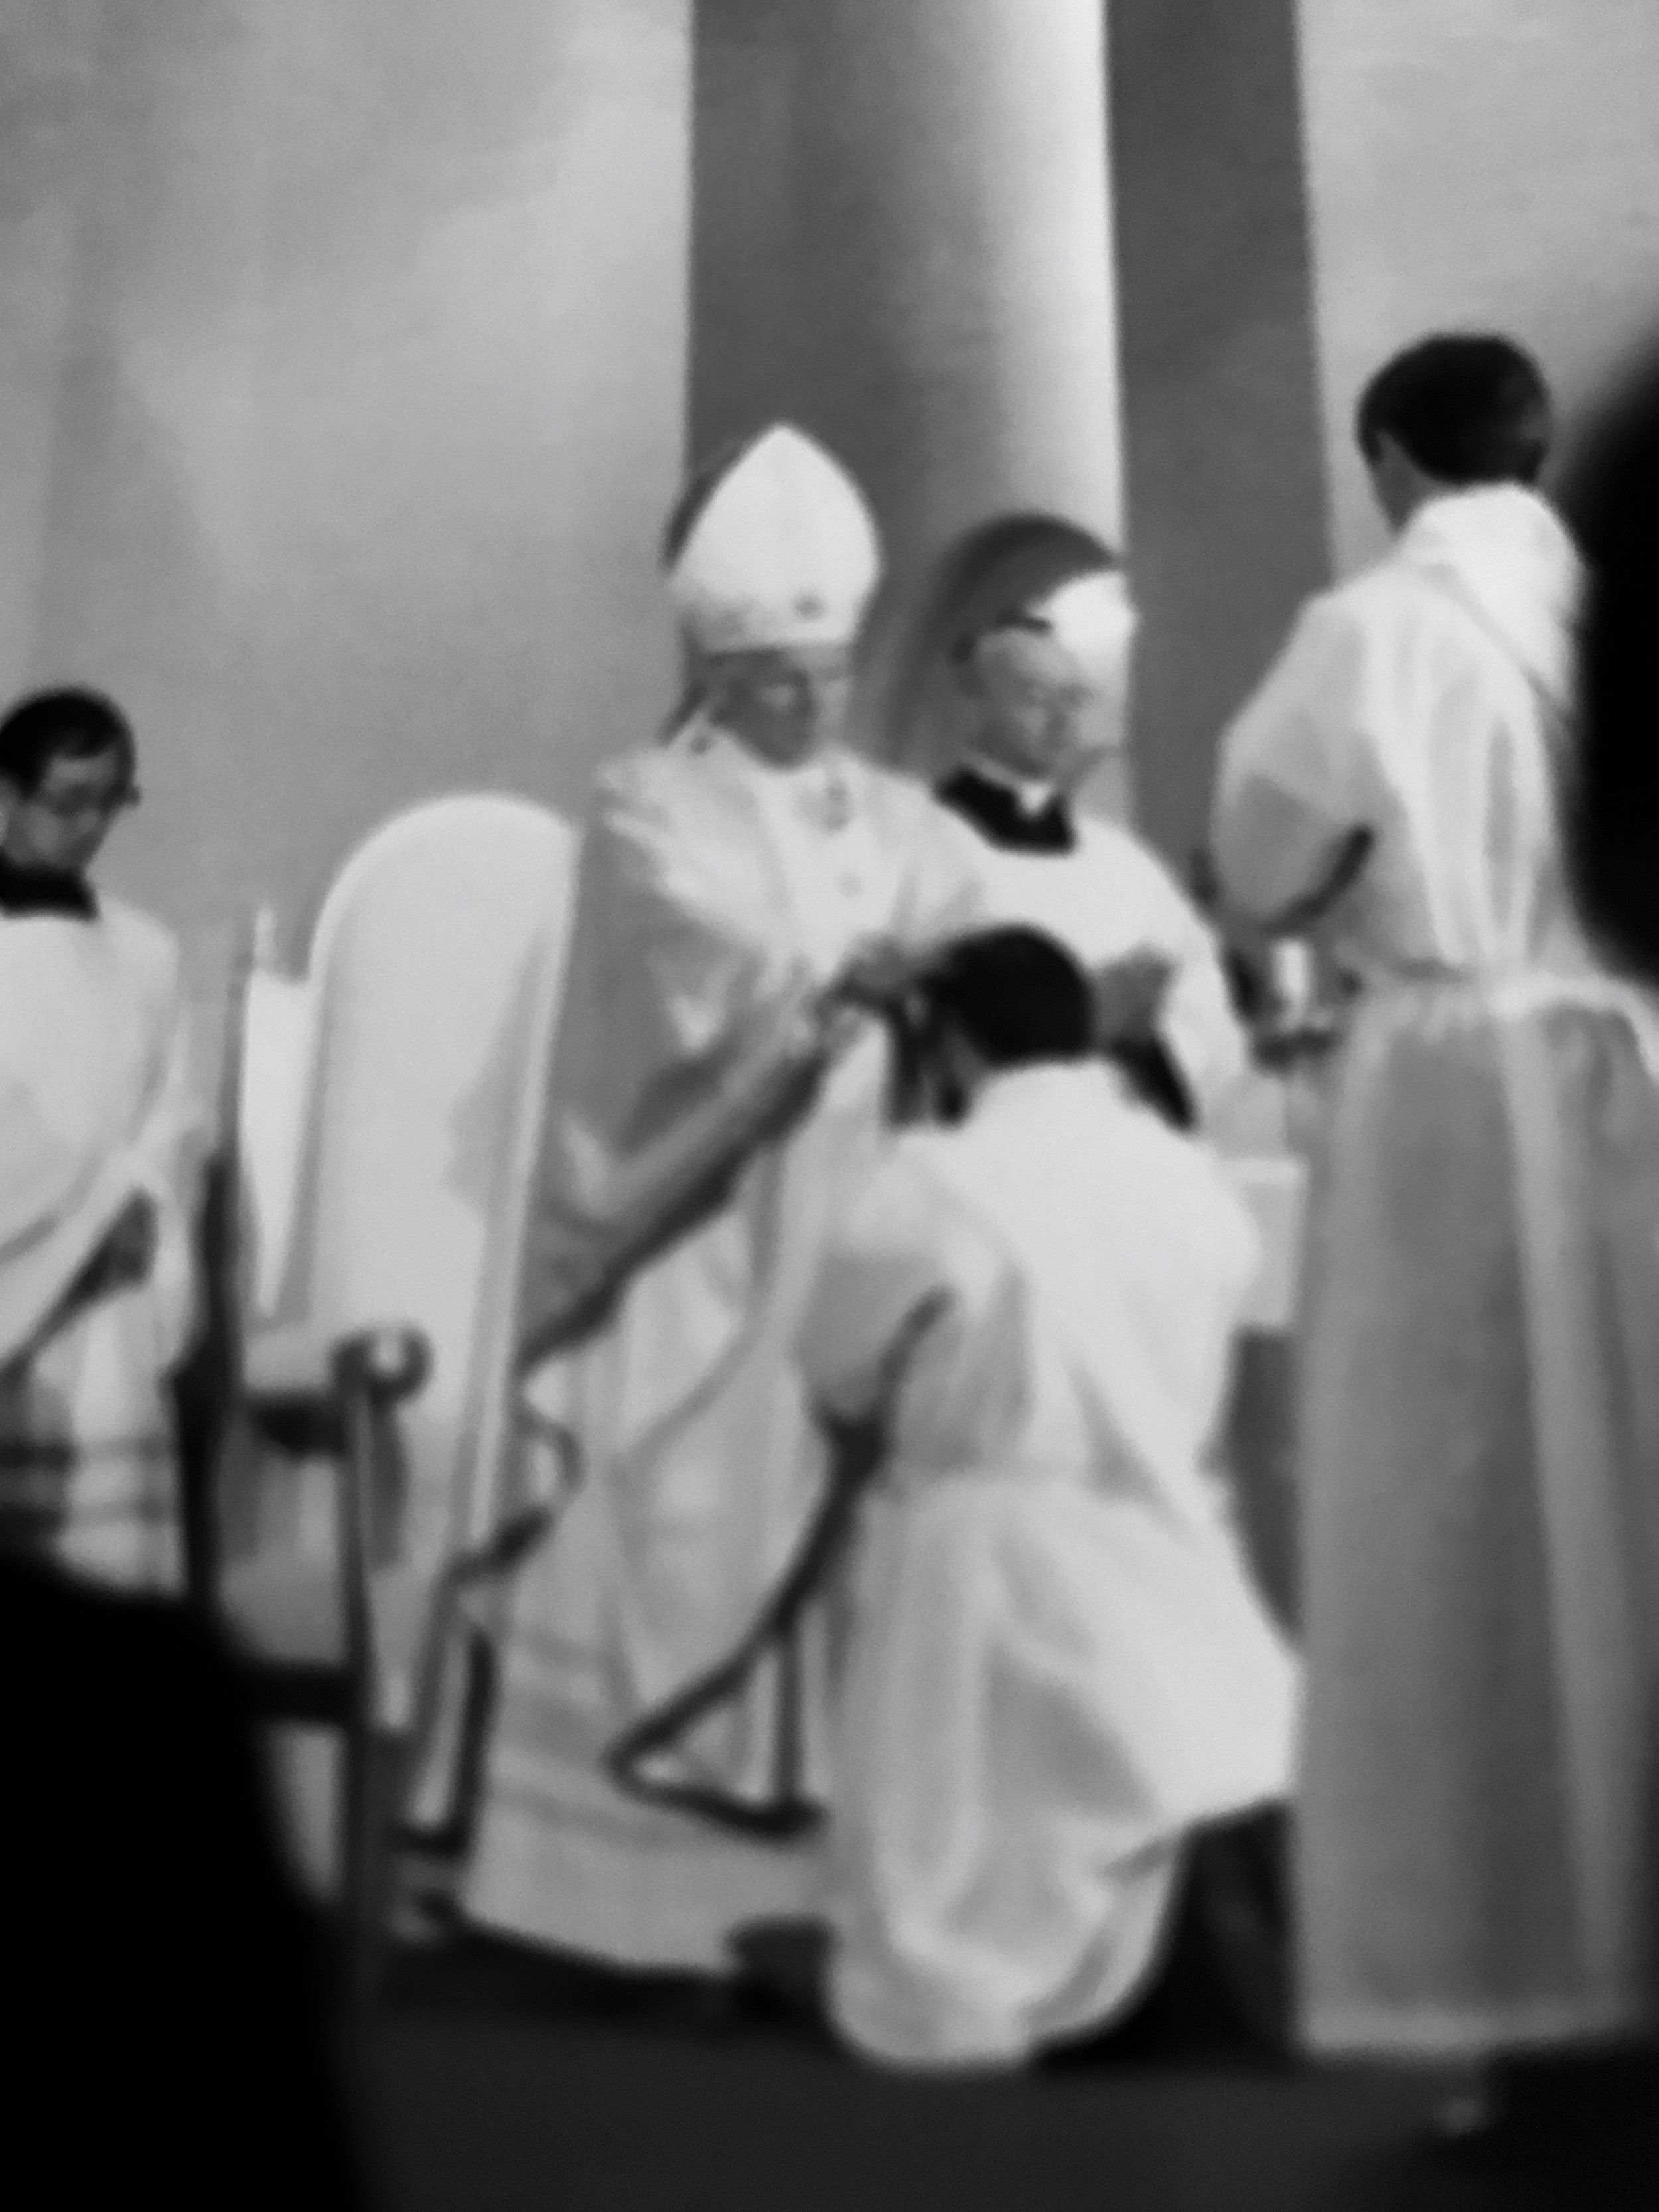  1981 Minoru Joseph Akakura was ordained to the priesthood by Saint John Paul II in Nagasaki.